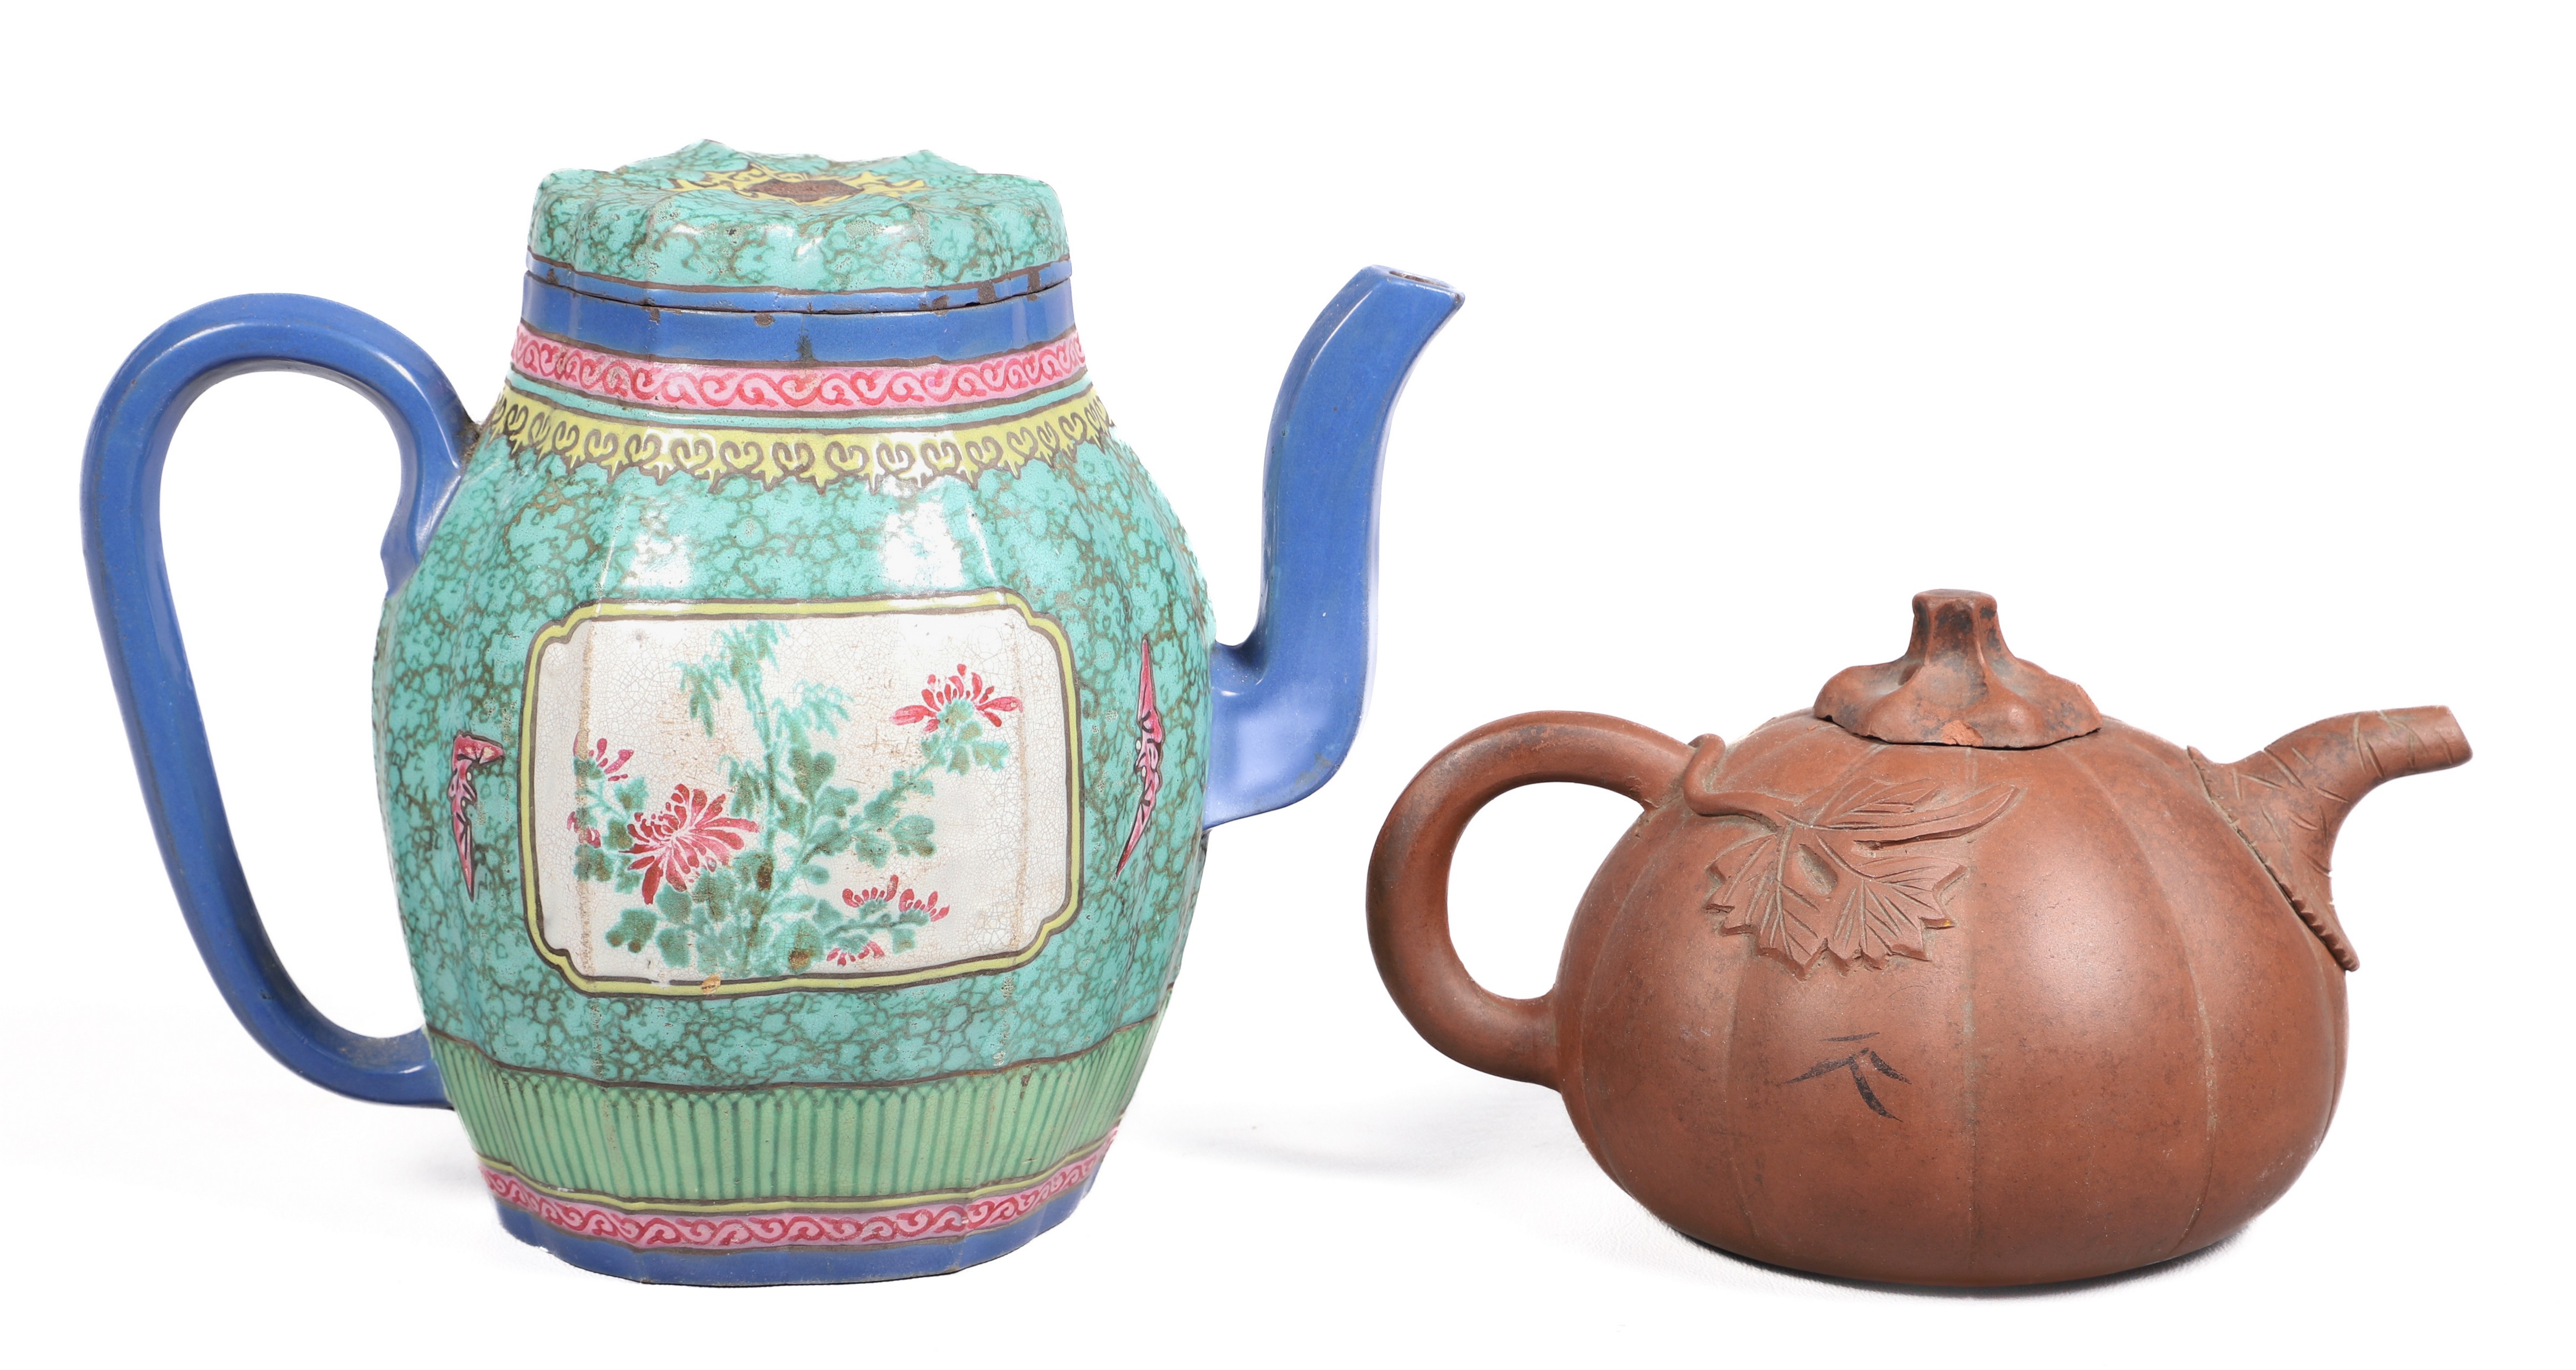  2 Chinese yixing pottery teapots  2e0cdc